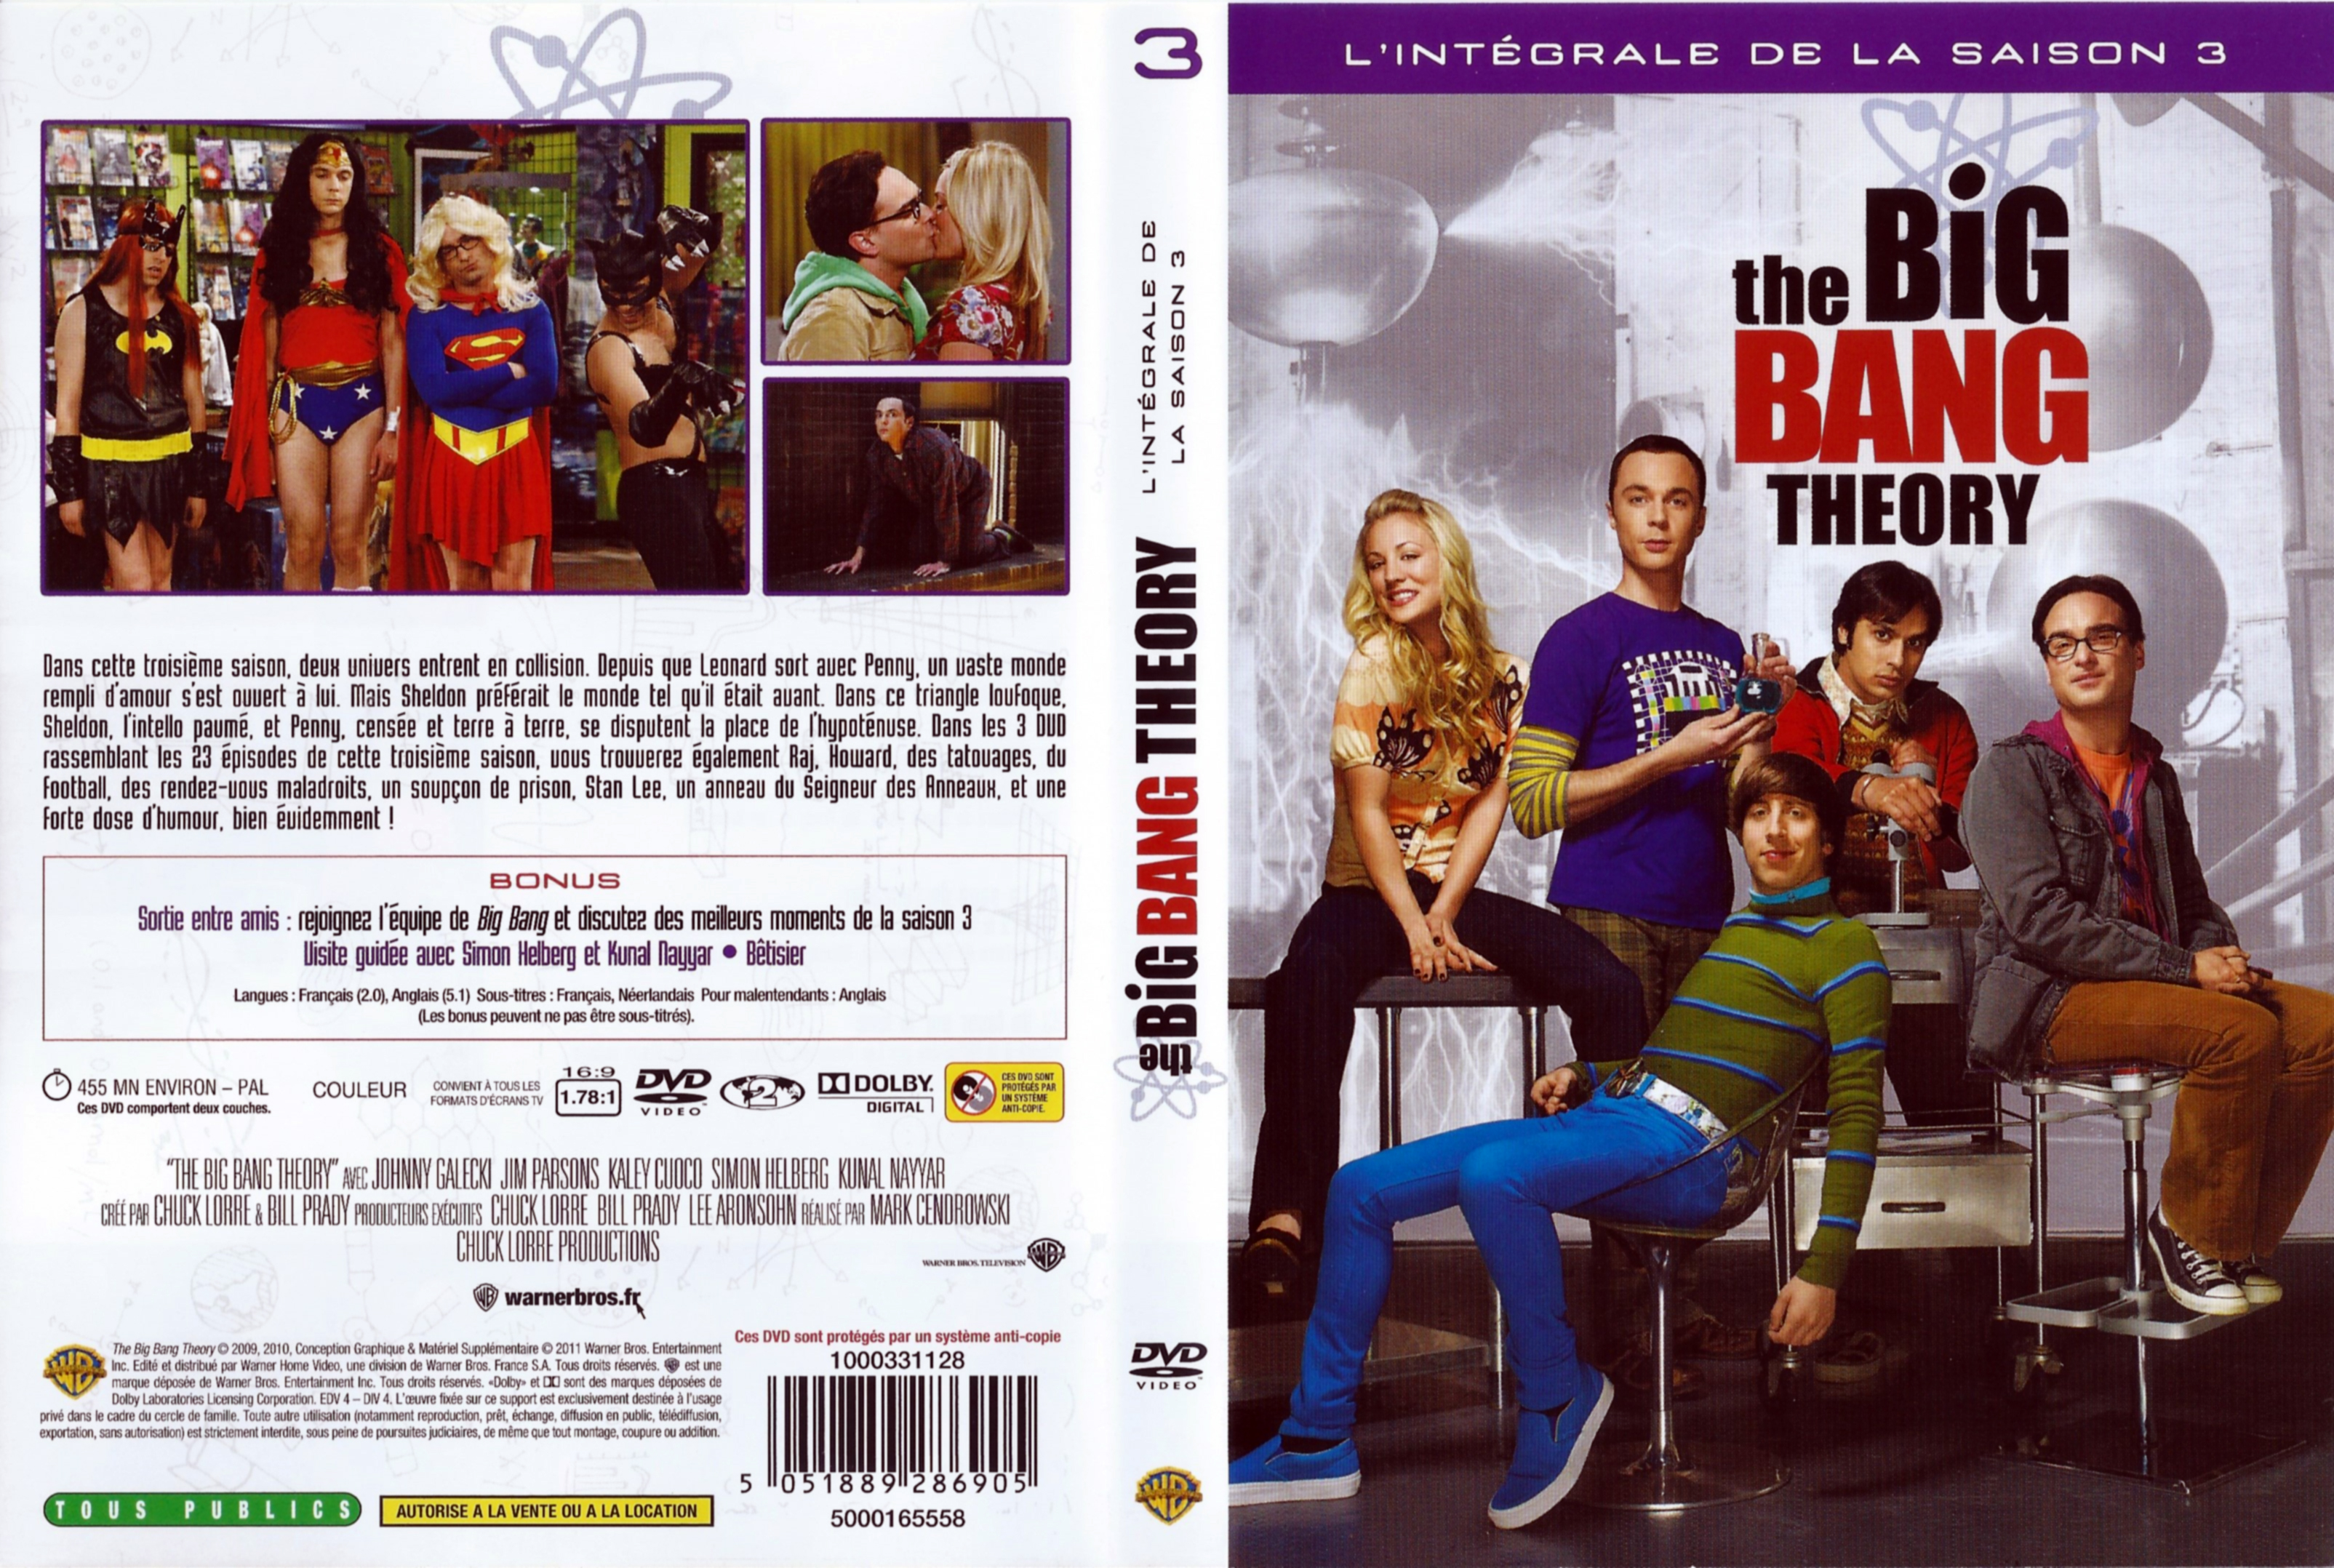 Jaquette DVD The Big Bang Theory Saison 3